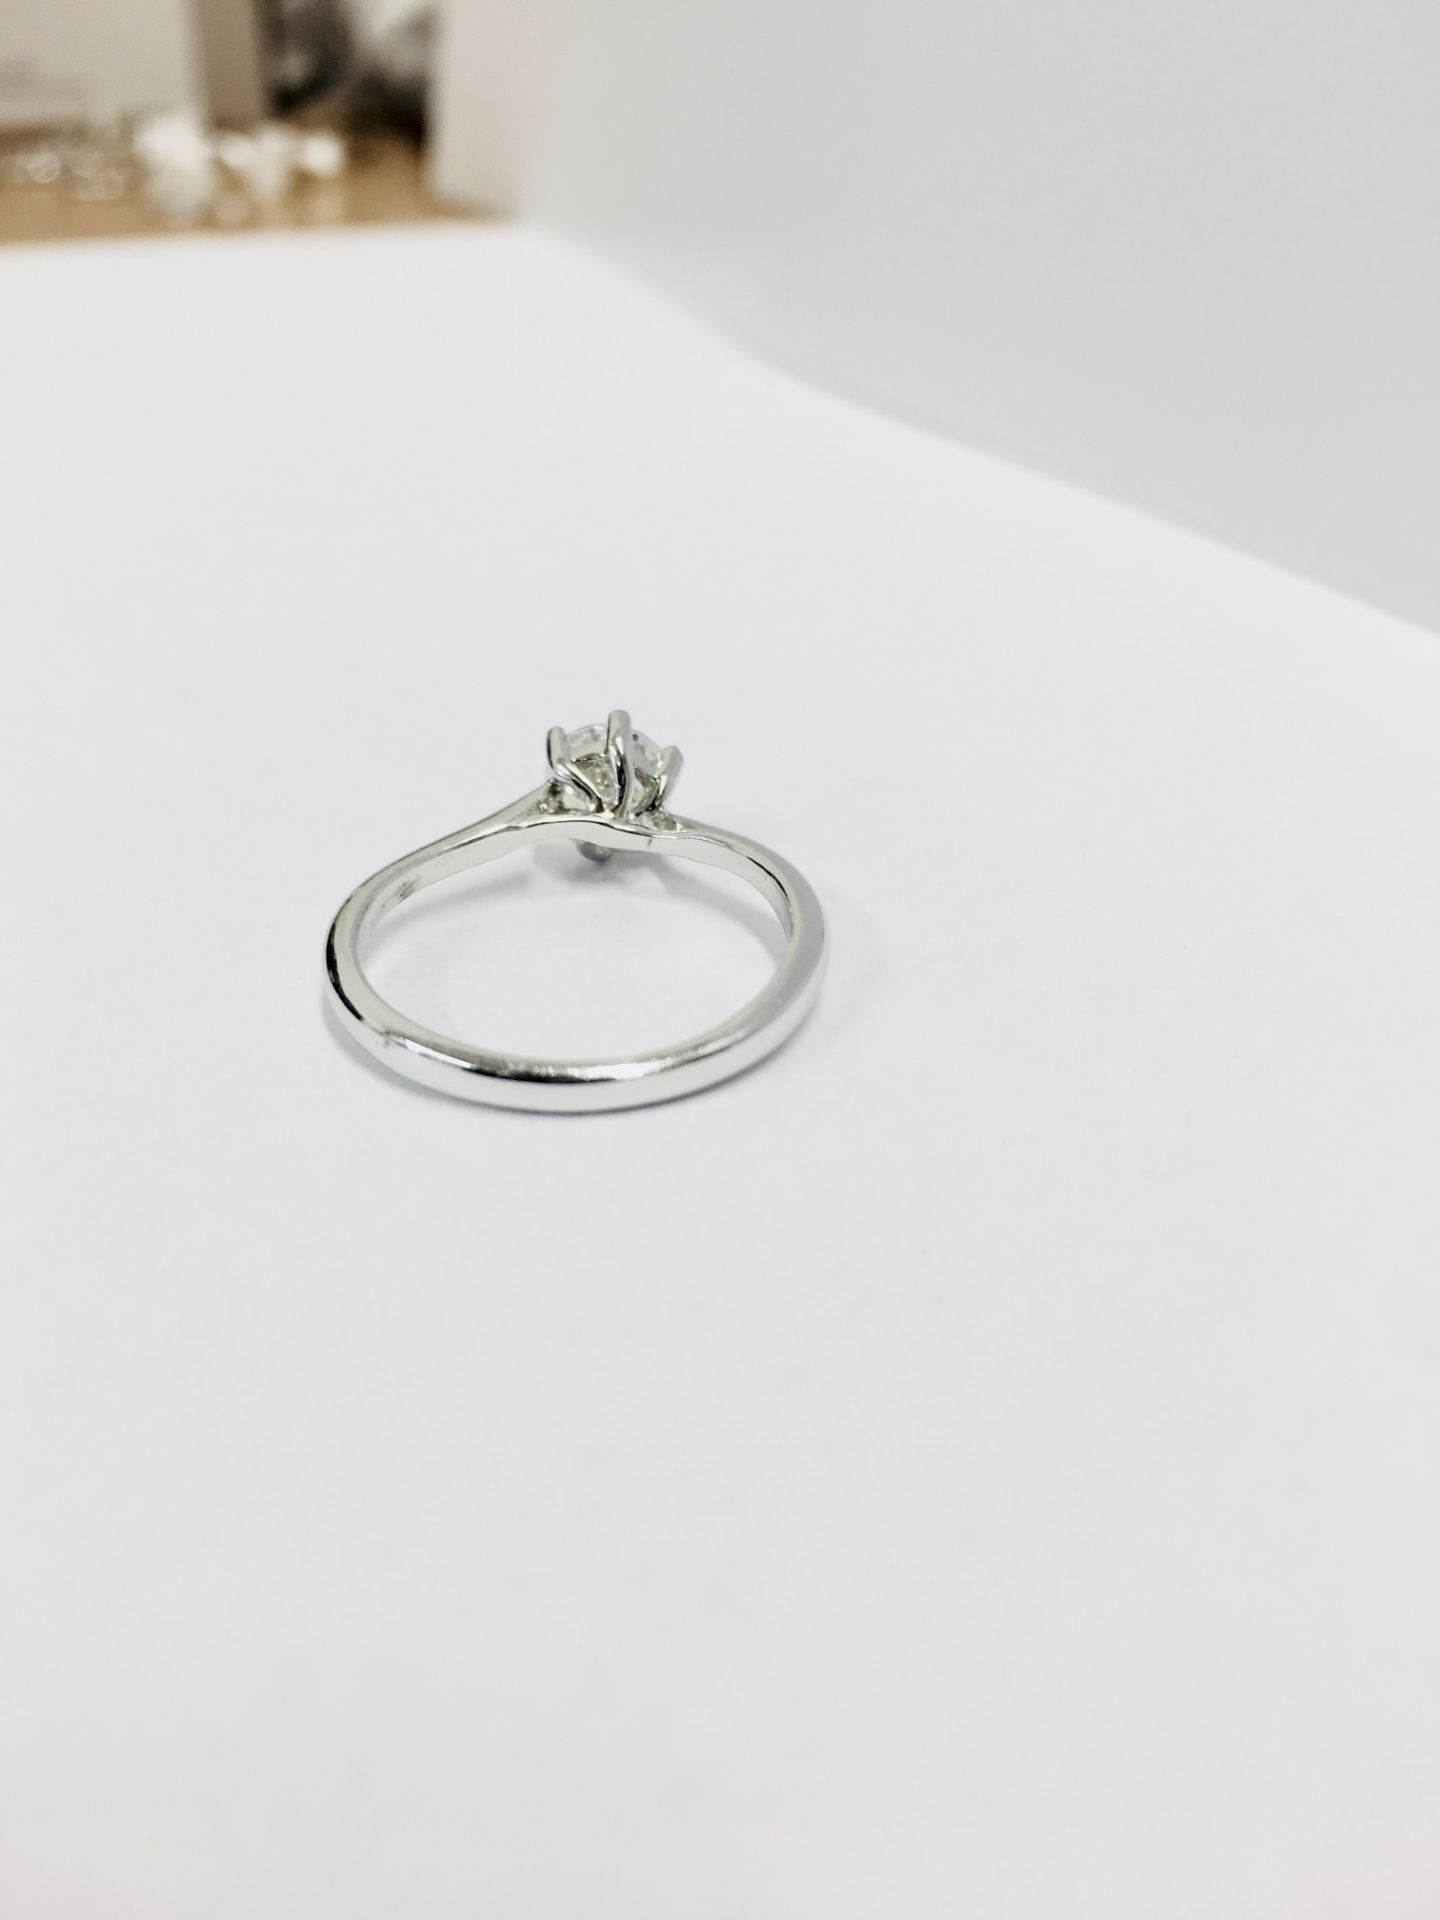 Platinum 6 claw twist diamond solitaire ring,0.50ct brilliant cut diamond h colour vs clarity ( - Image 5 of 6